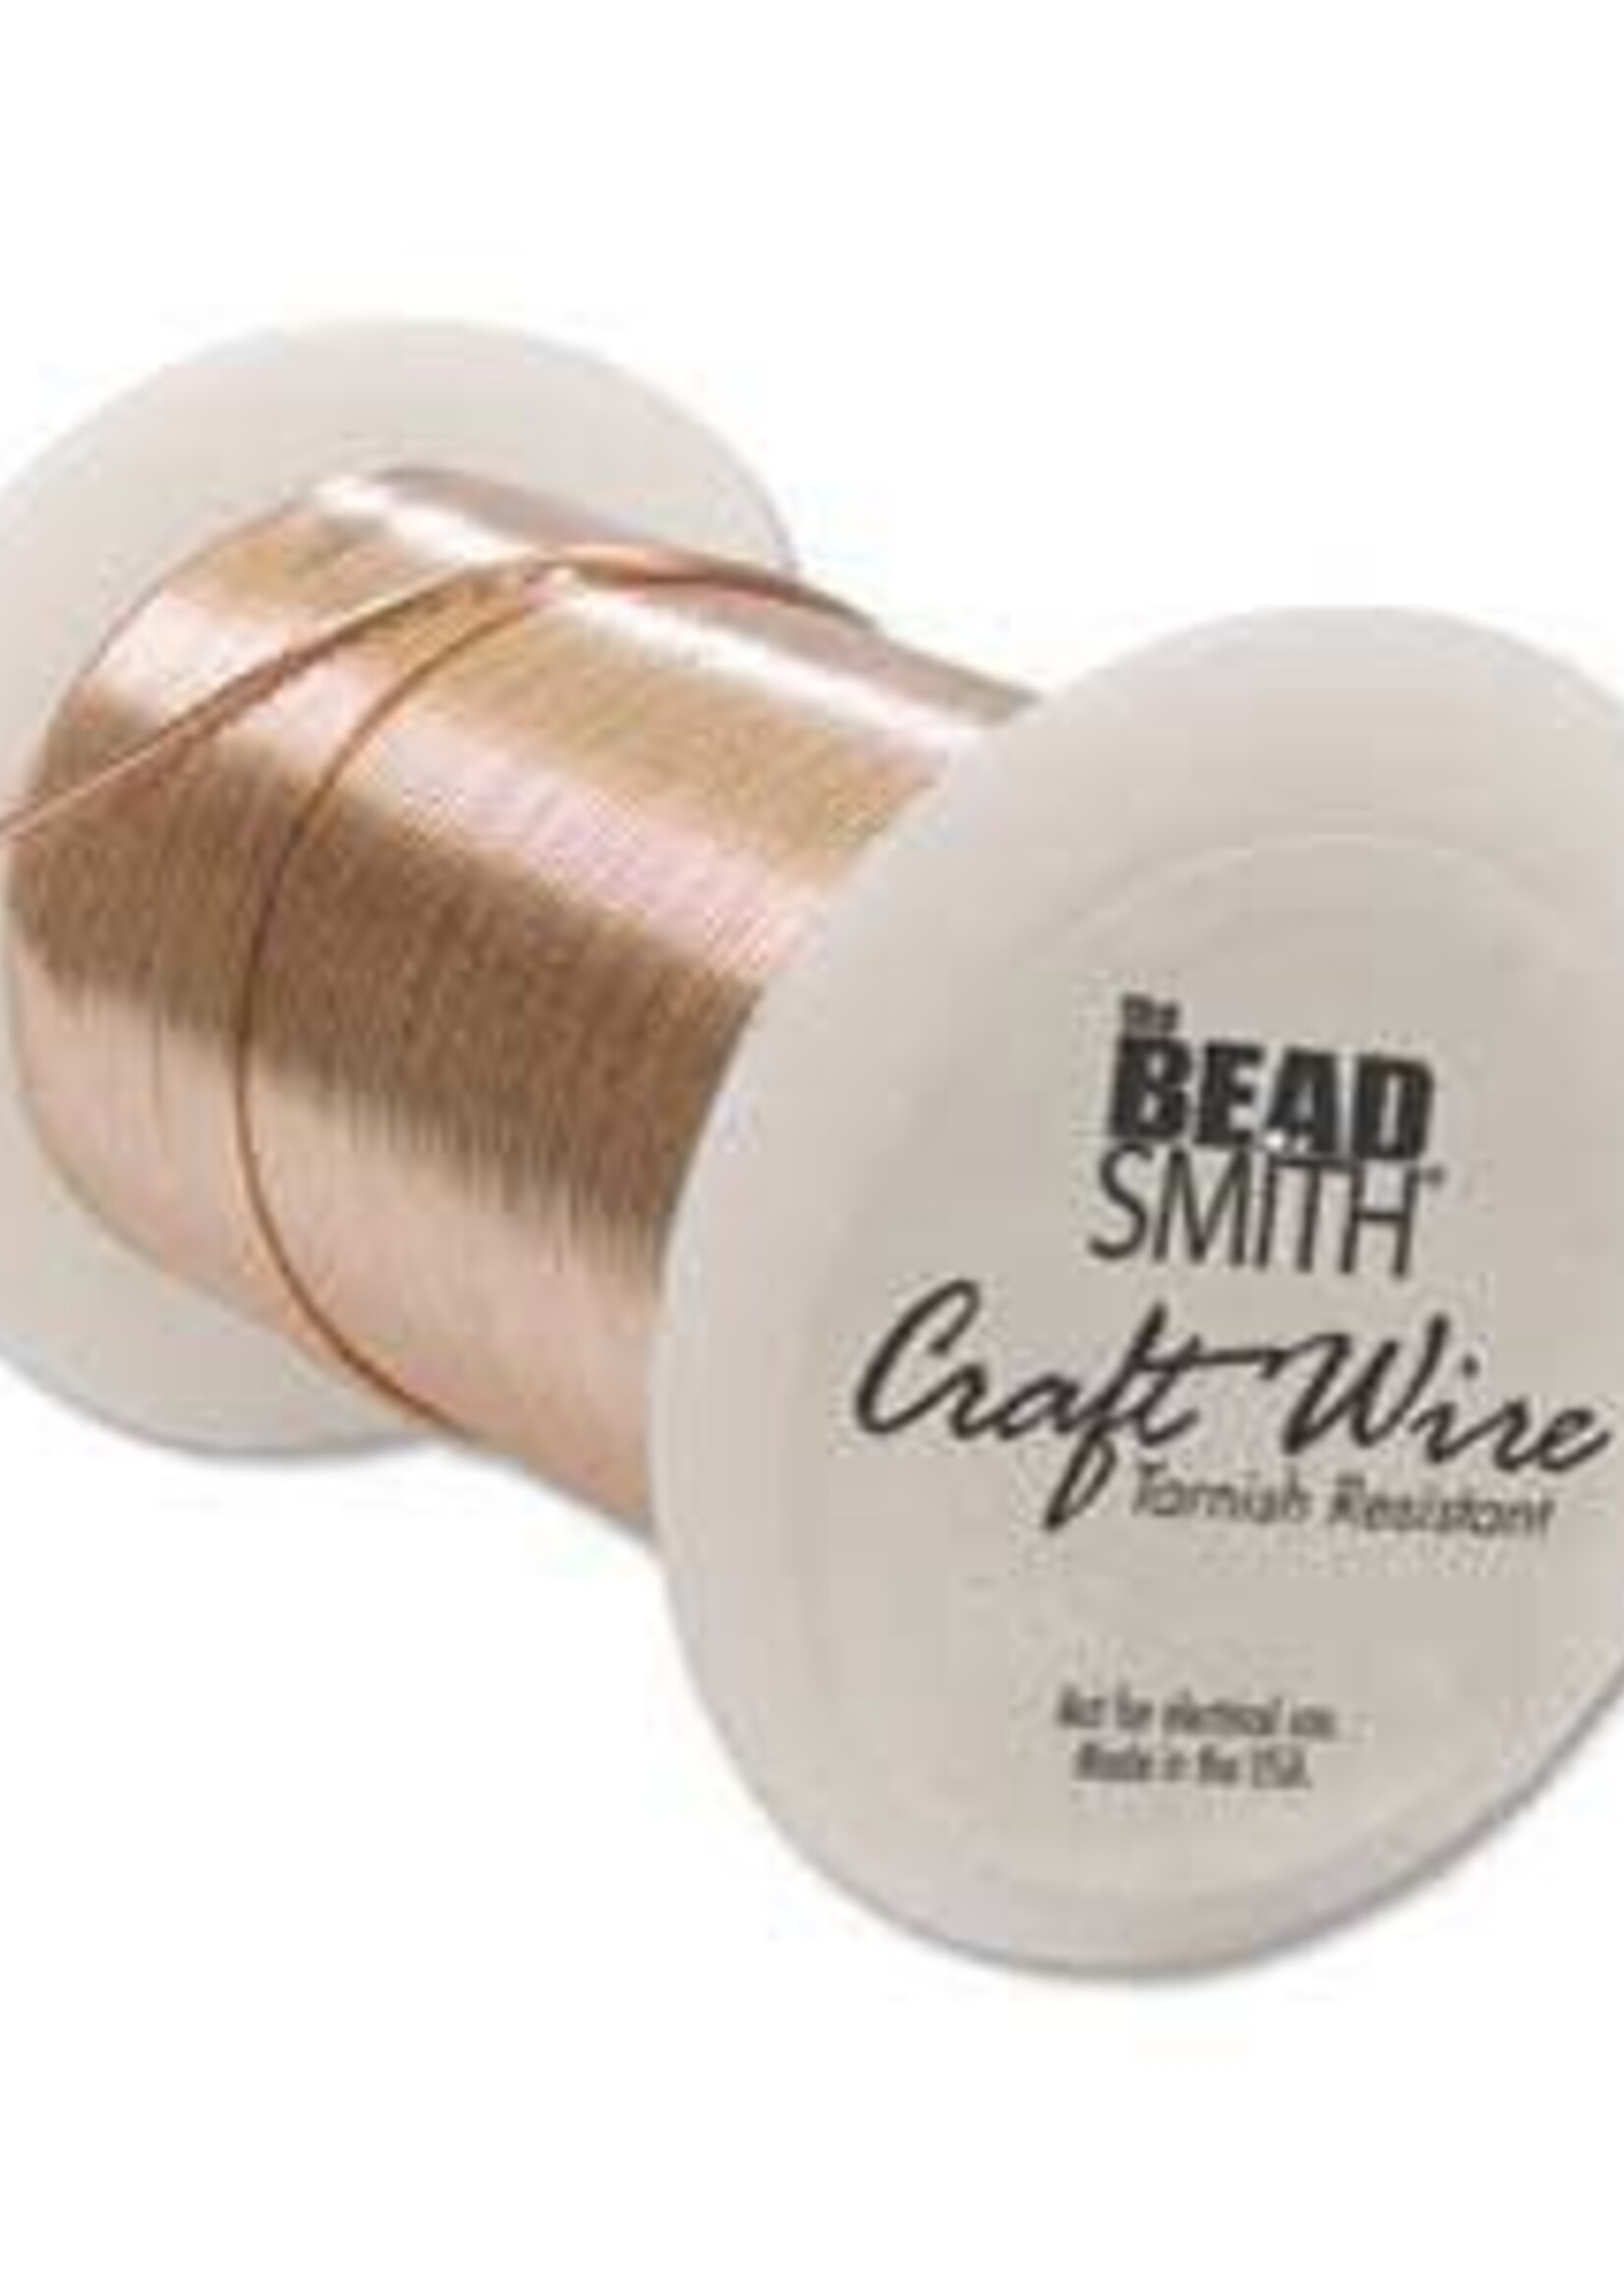 Craft Wire 24ga. Copper Plate 30yds